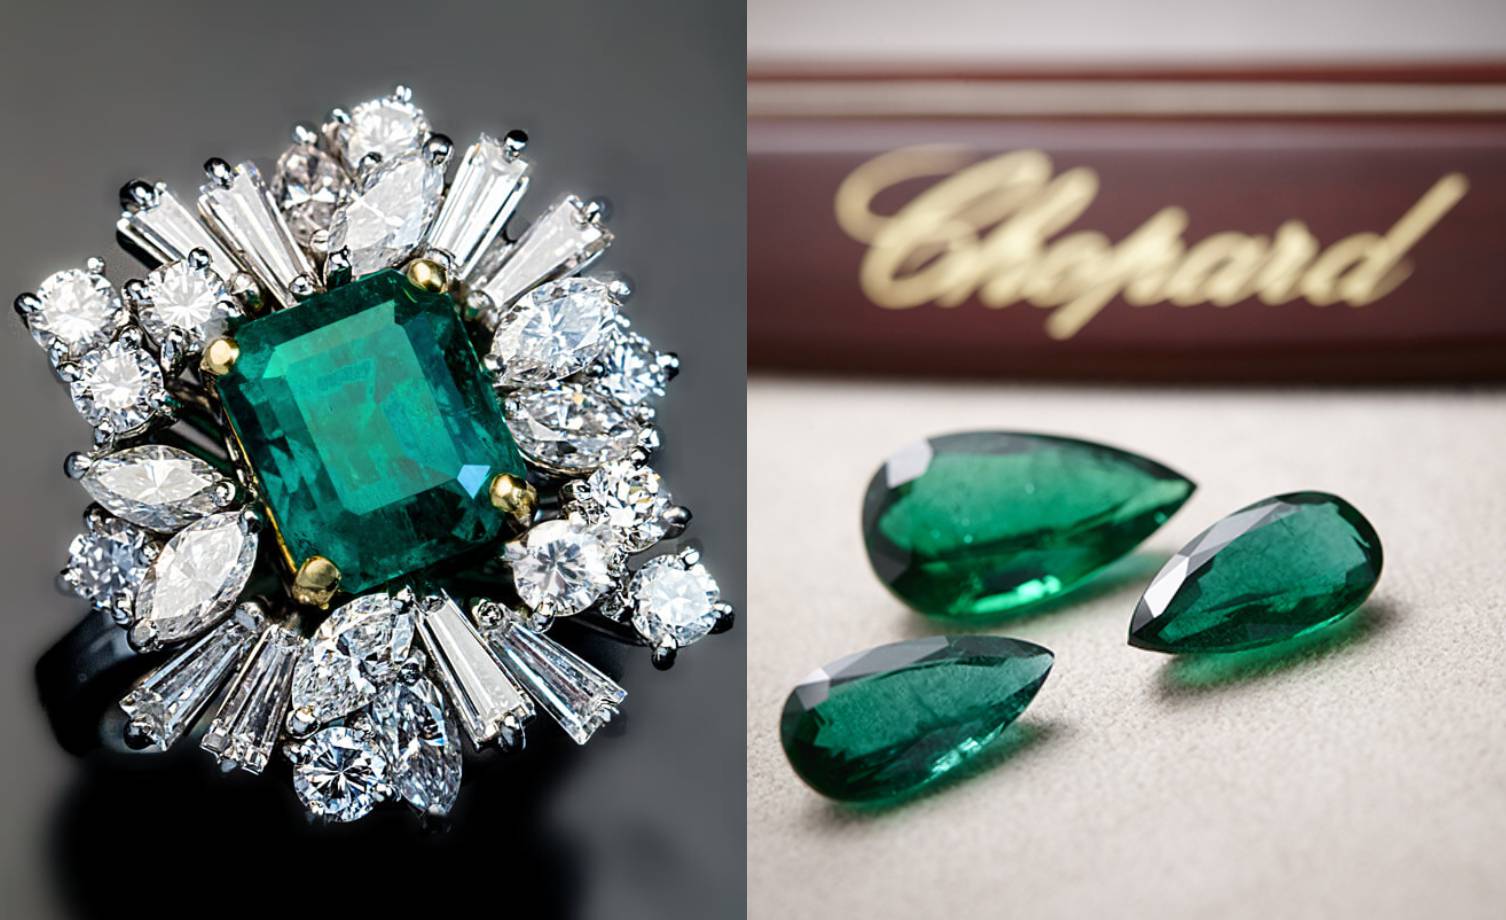 Snaga smaragda: Predivan zeleni dragi kamen kao simbol sreće, bogatstva i duhovnosti